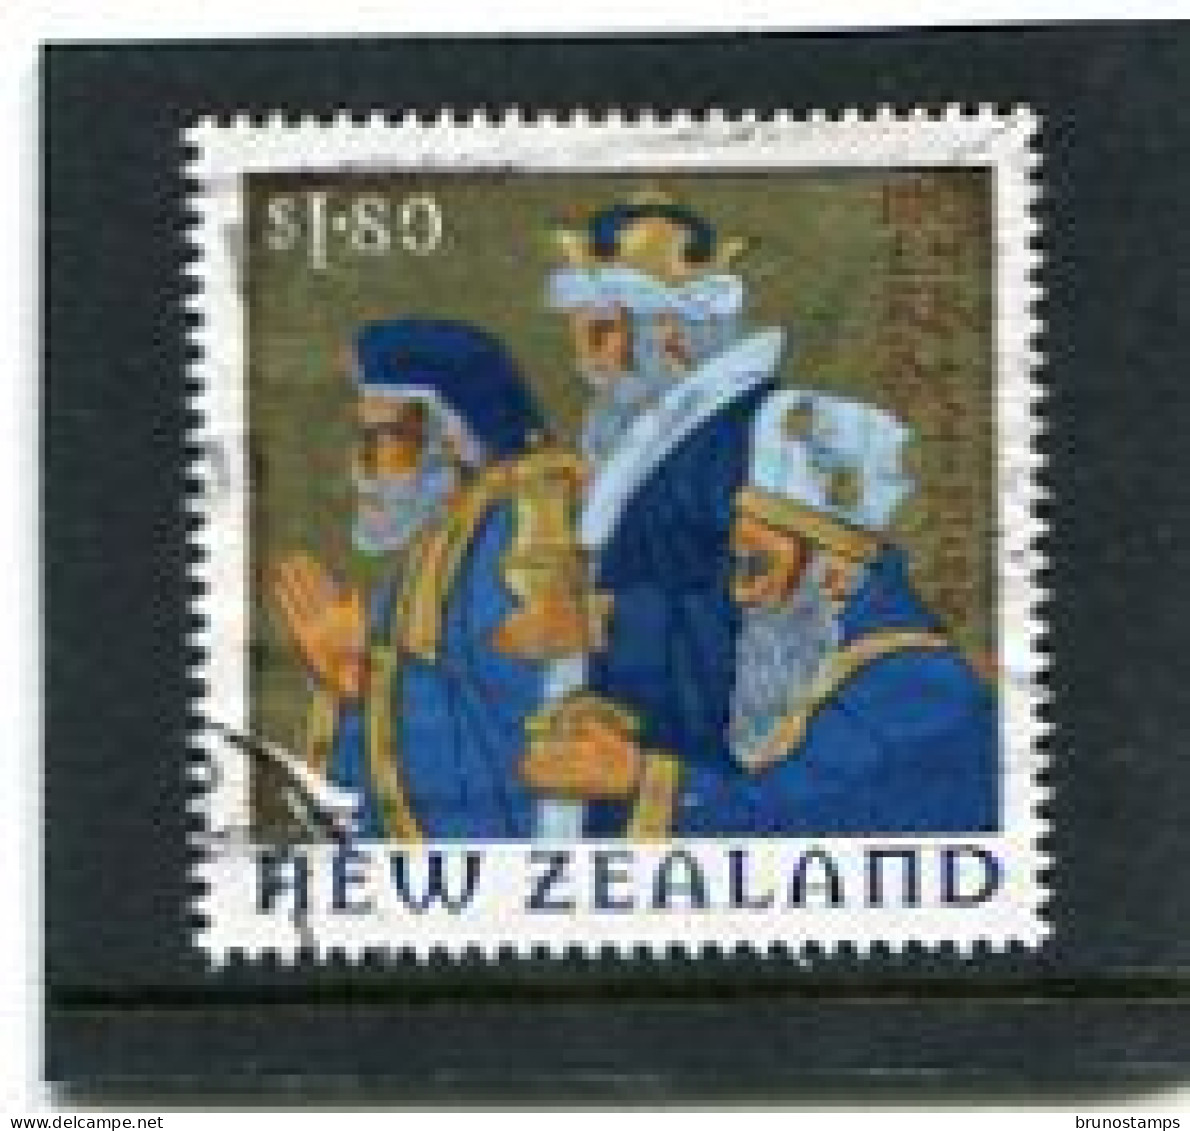 NEW ZEALAND - 2009  1.80$  CHRISTMAS   FINE  USED - Oblitérés